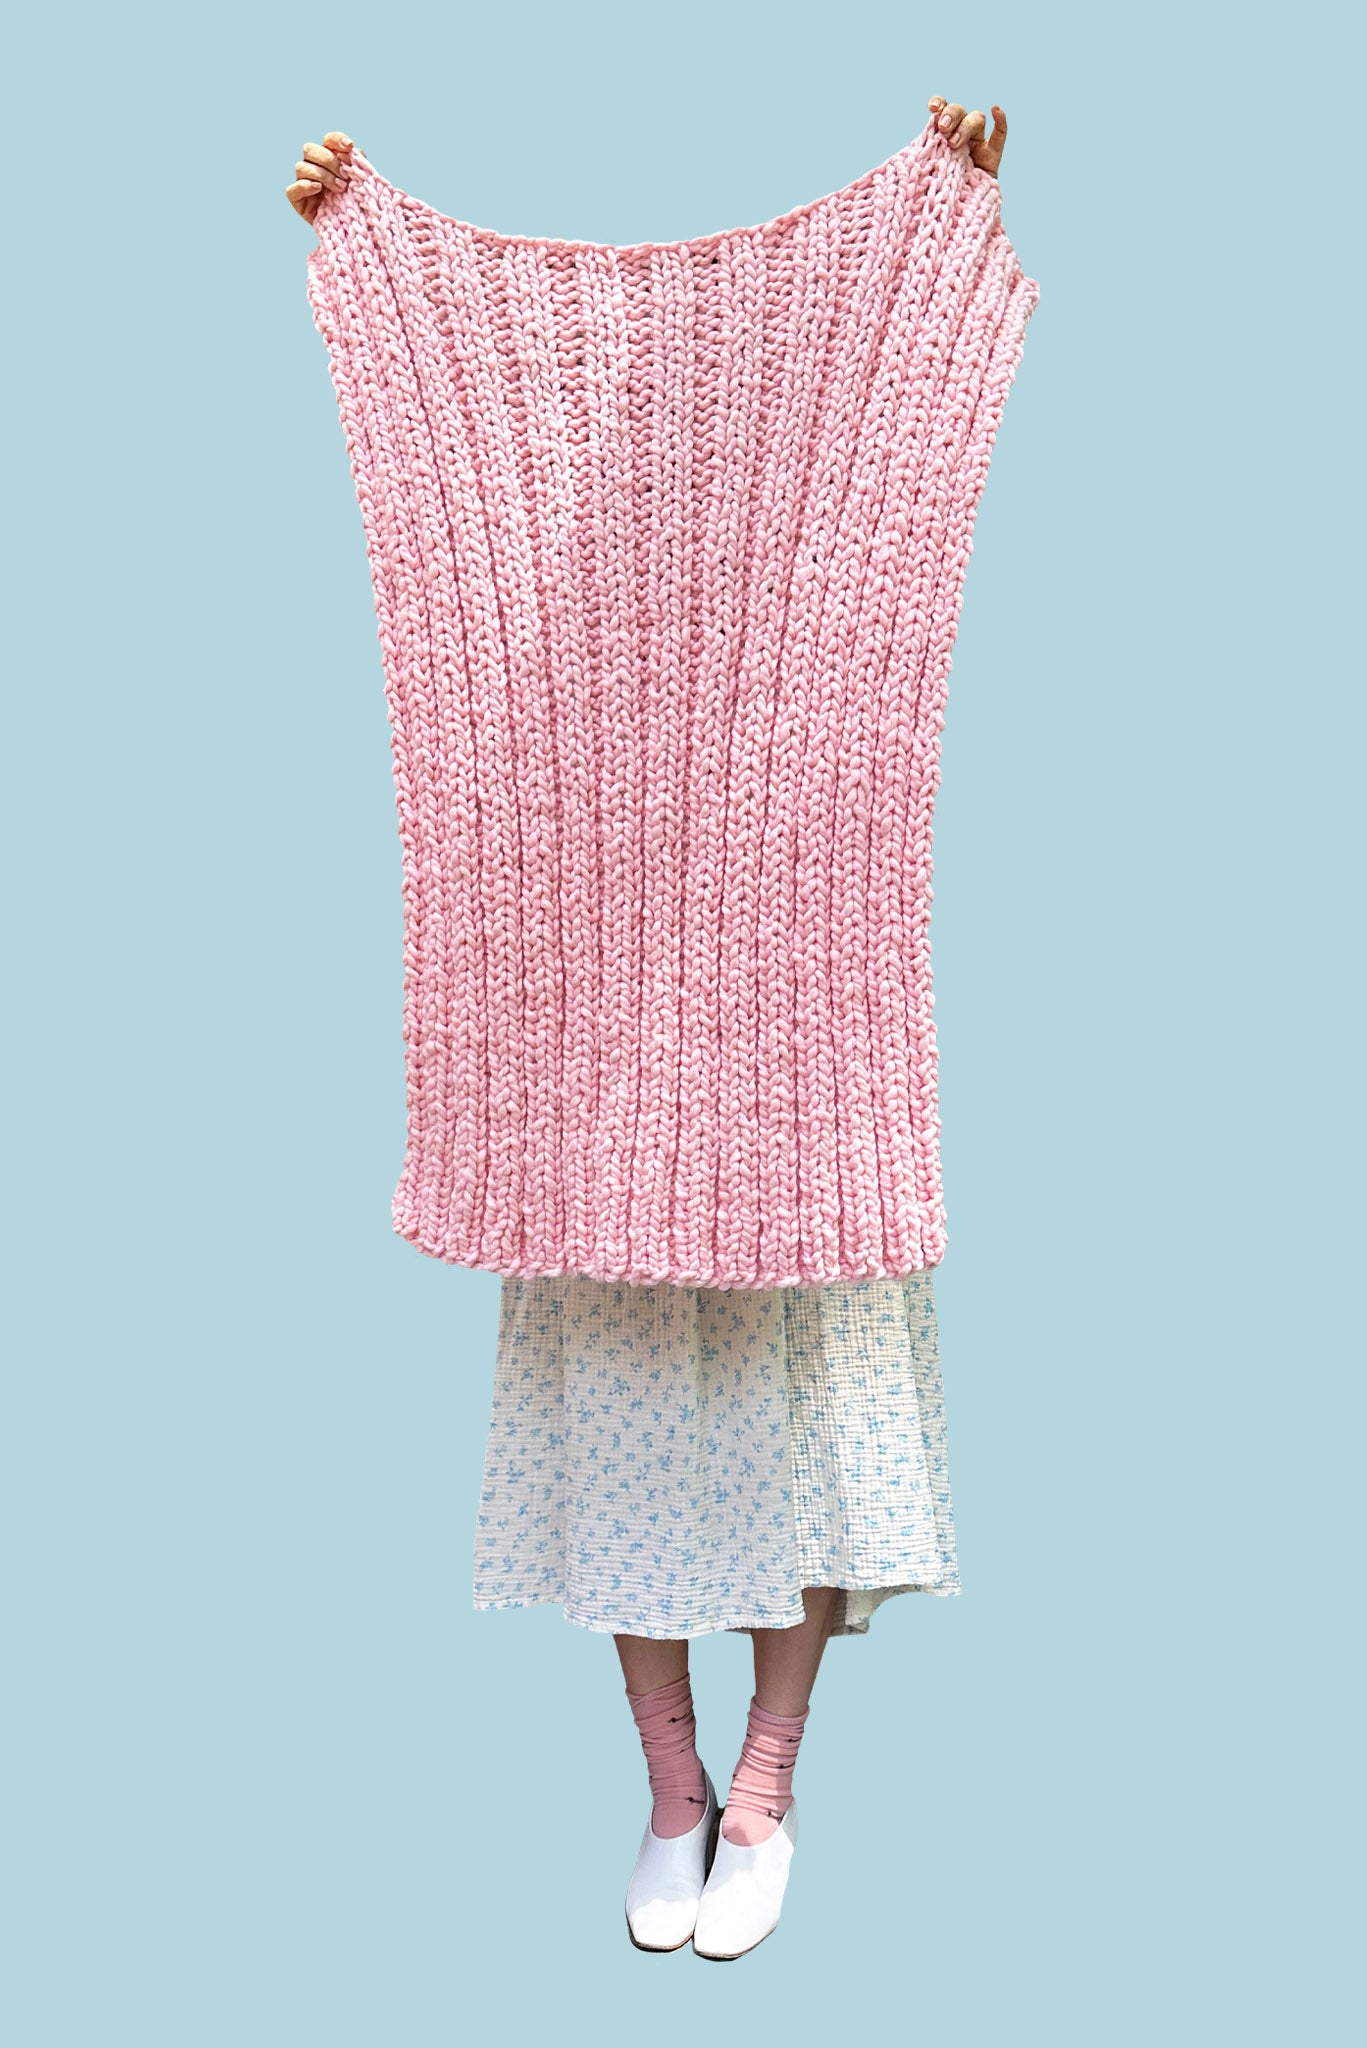 Mia Blanket Knitting Kit. Stripy Throw Knit Kit. Beginners